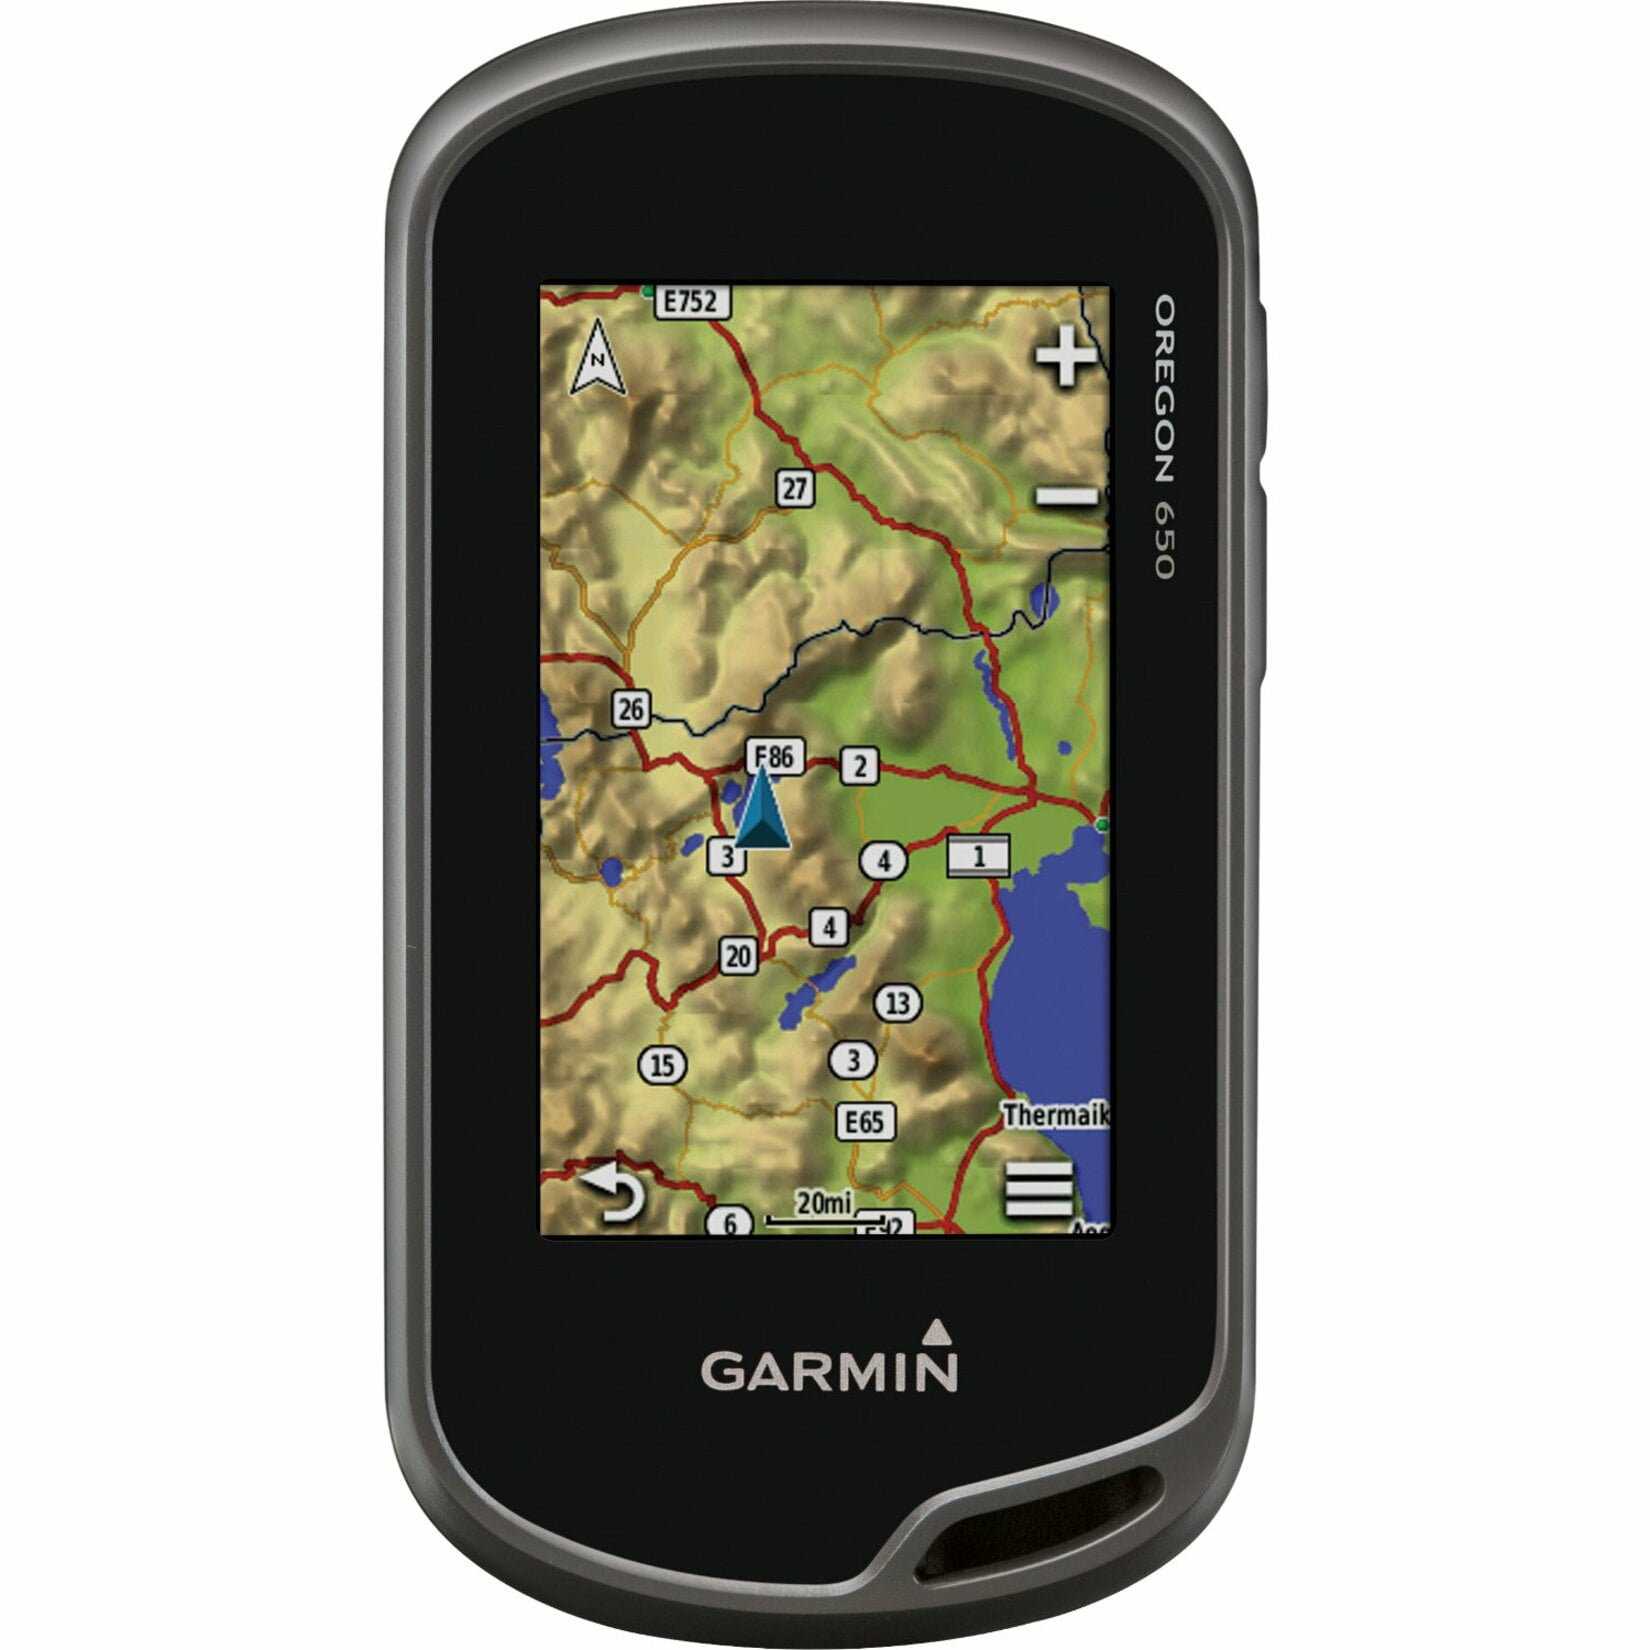 Garmin 650. Гармин Орегон 650. GPS Garmin 650. Навигатор Garmin Oregon 650 ww. Навигатор Гармин Орион 650.